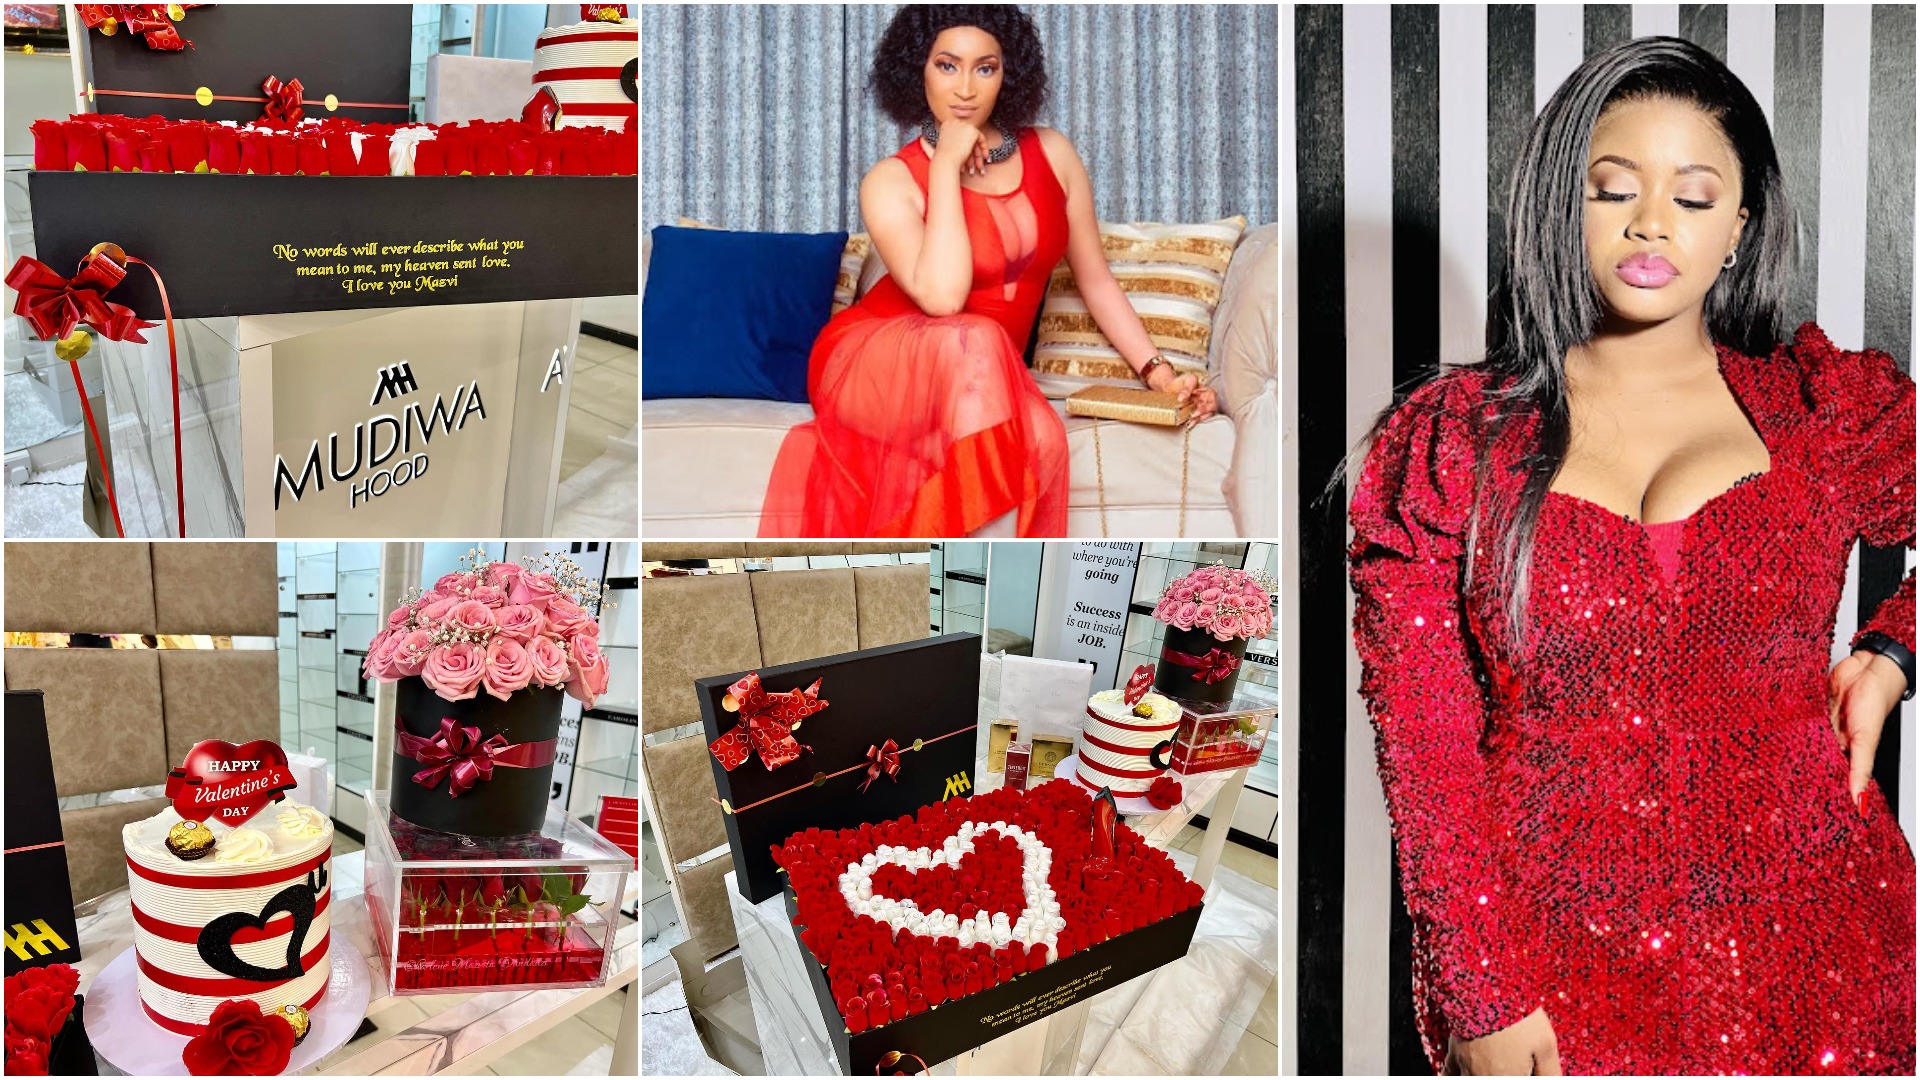 Trending On Social Media| US$3 600 Flowers For Valentines’ | Celebs Rock Valentine’s Dresses|